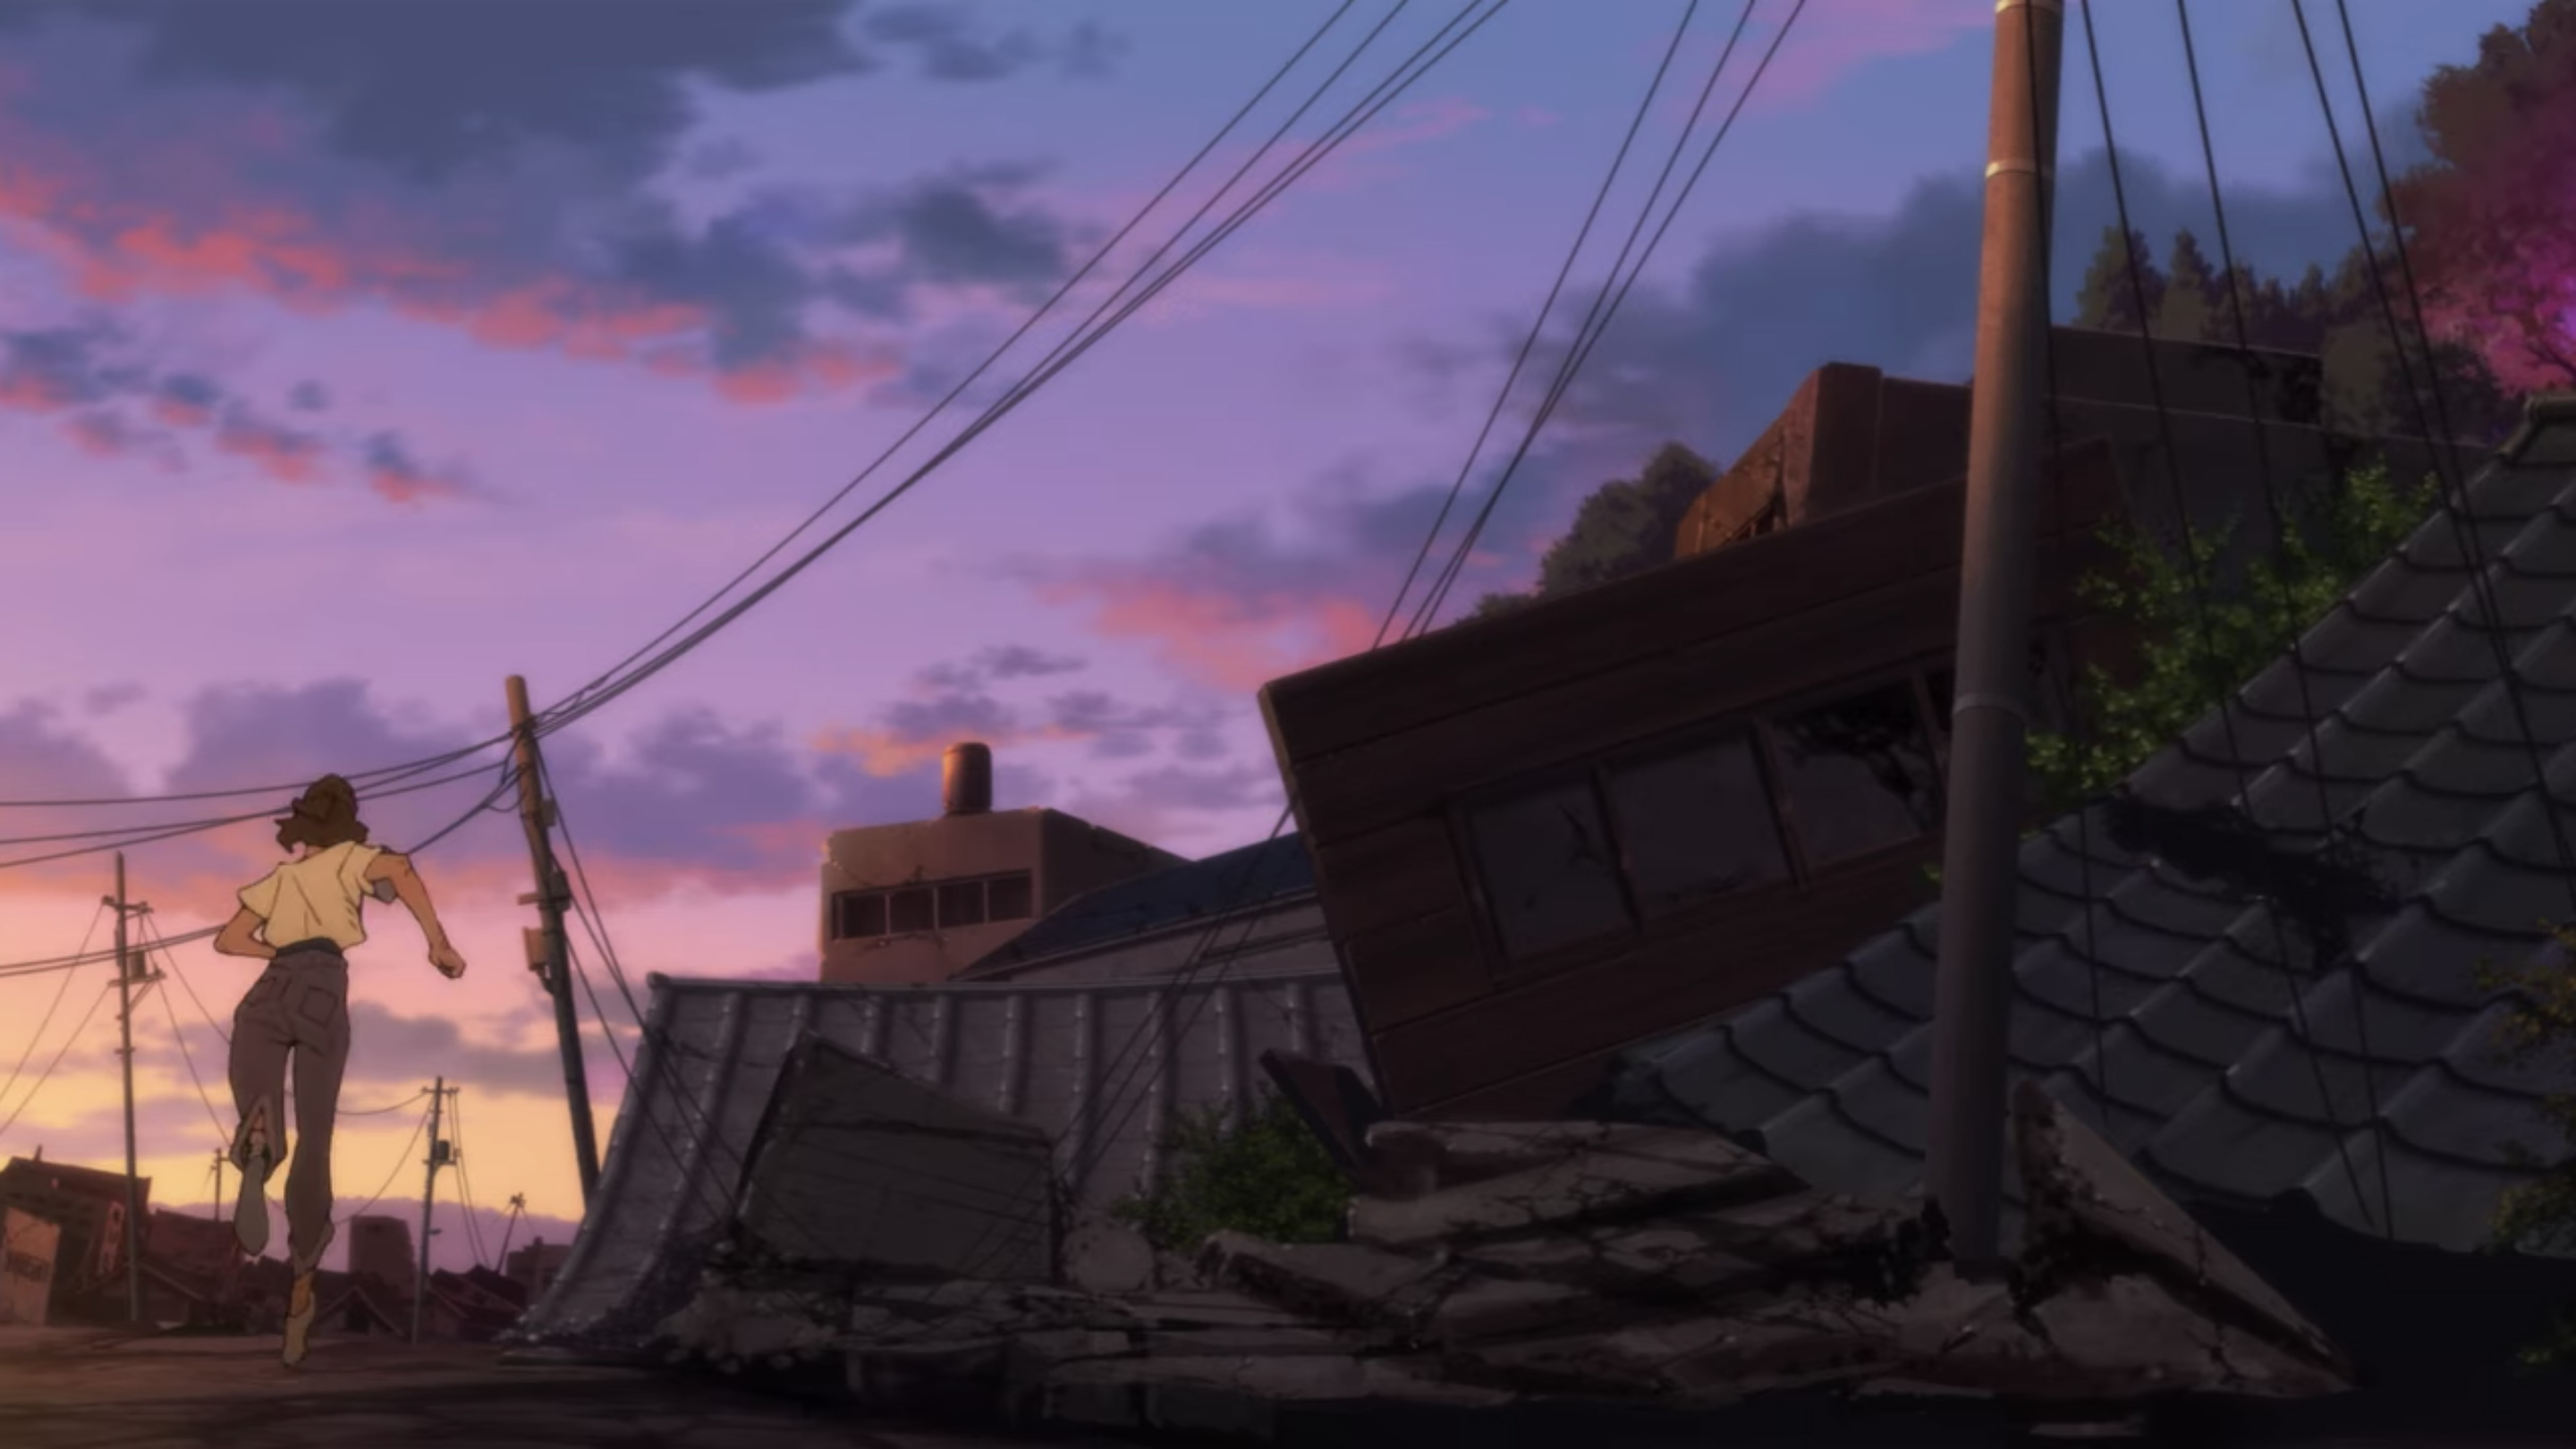 FEATURE: How the 2011 Tohoku Earthquake and Tsunami Influenced Anime Over the Past Decade